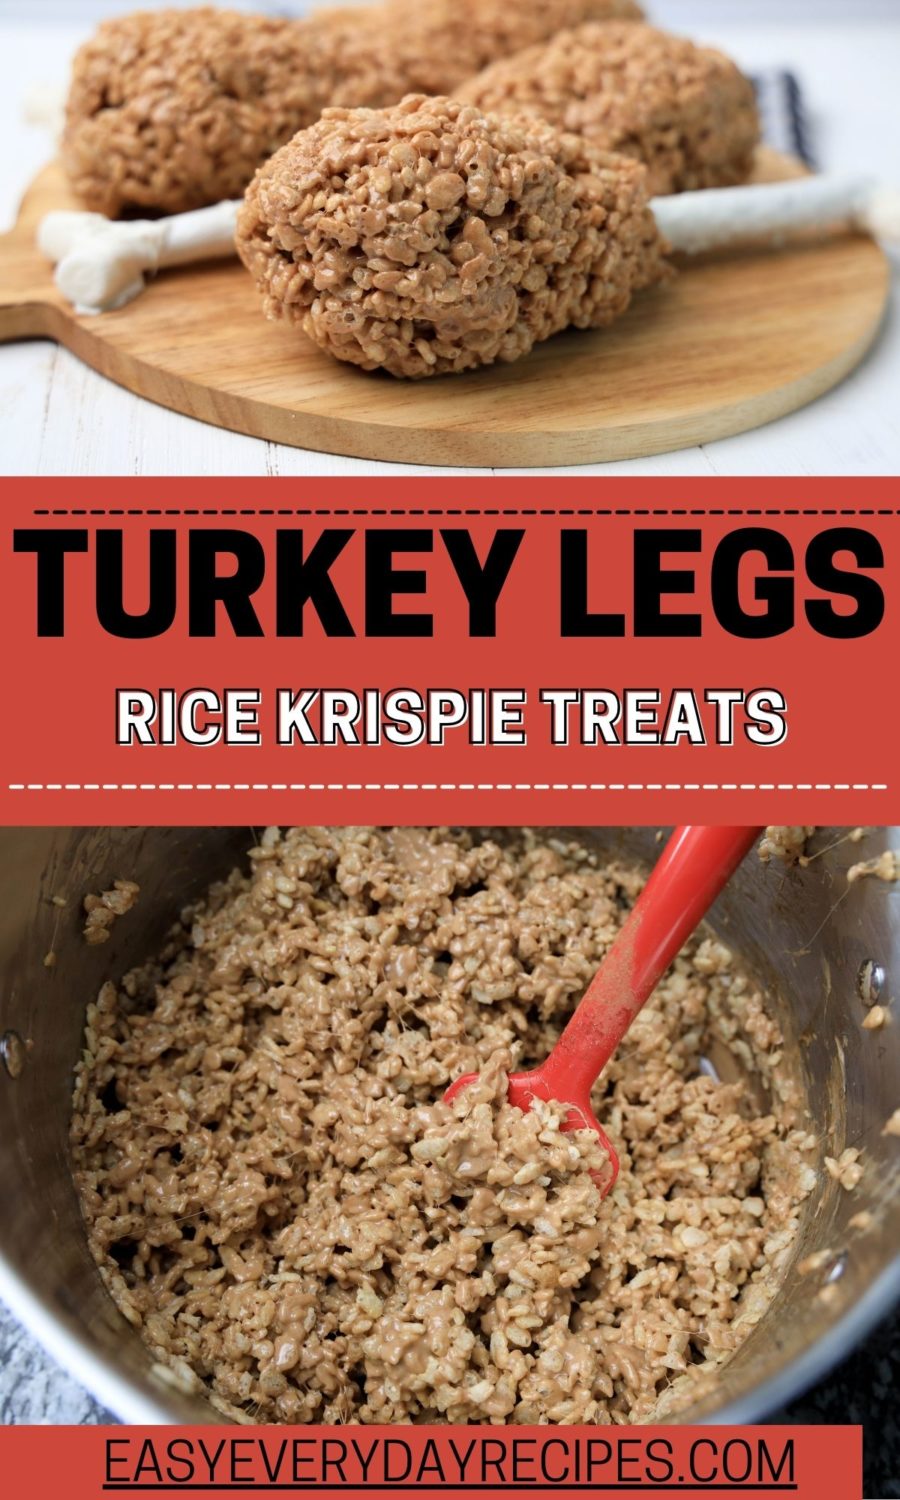 Turkey legs rice krispie treats.